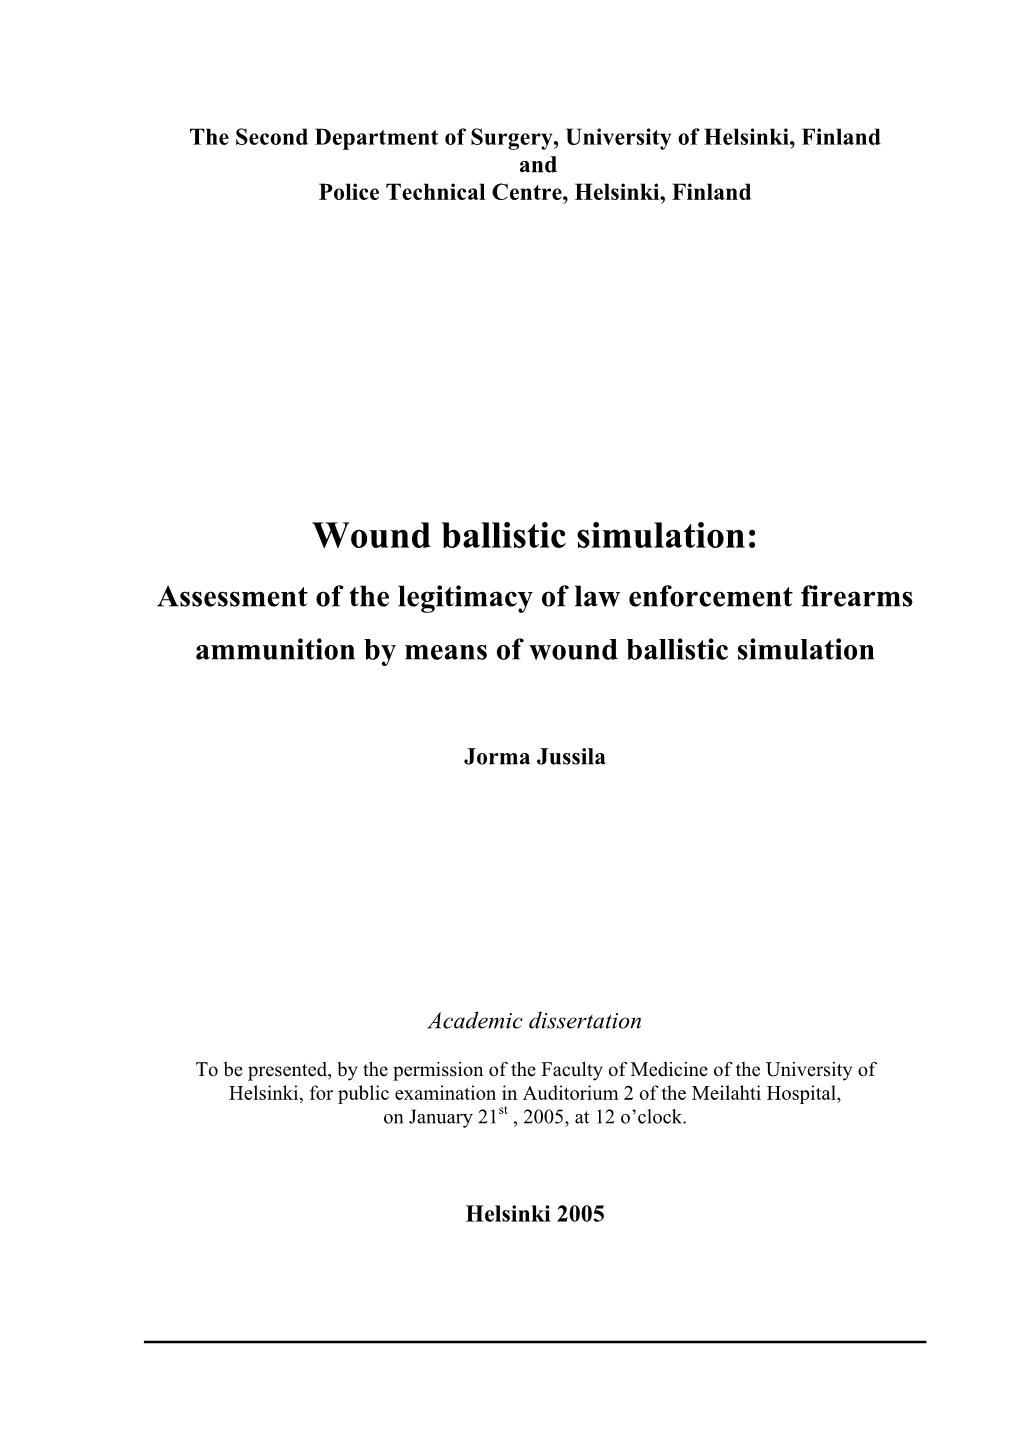 Wound Ballistic Simulation: Assessment of the Legitimacy of Law Enforcement Firearms Ammunition by Means of Wound Ballistic Simulation